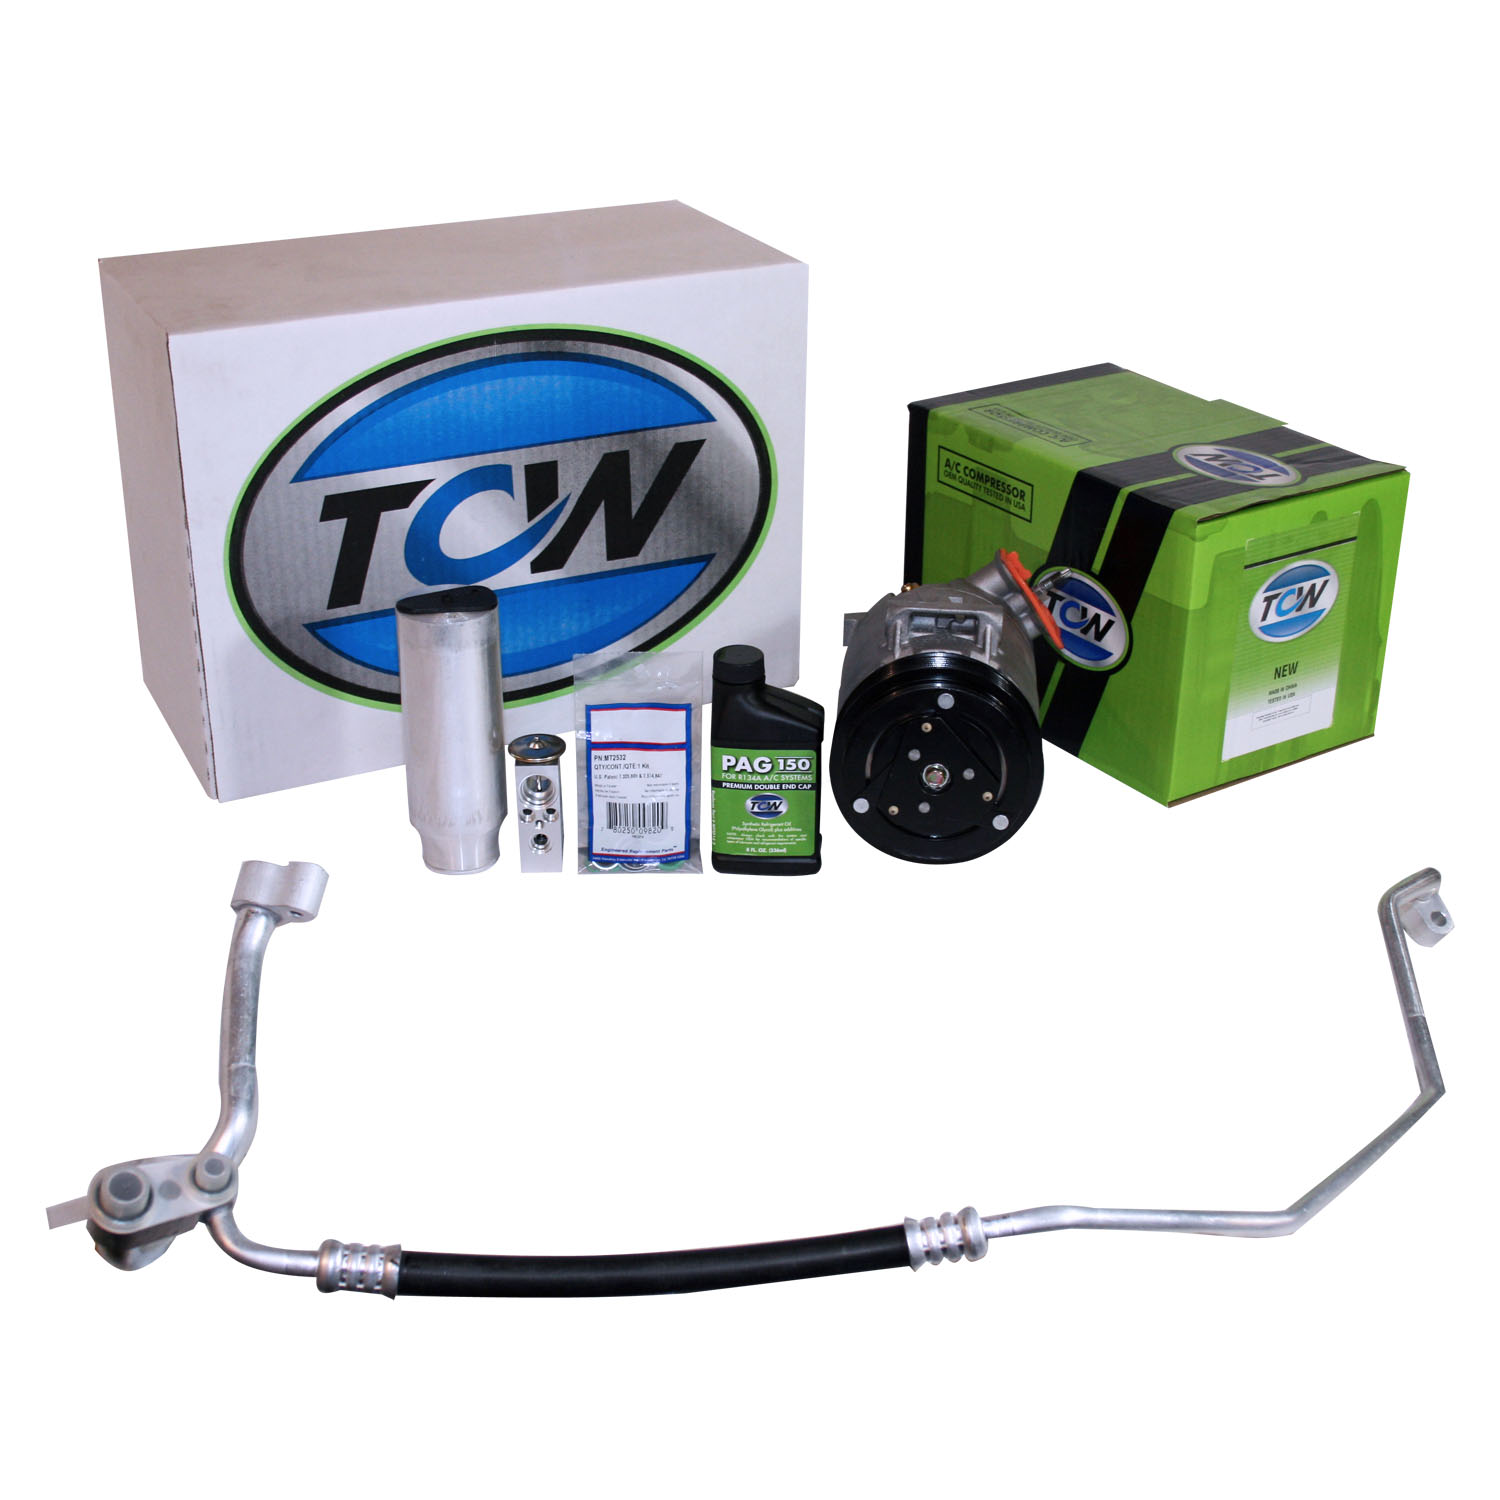 TCW Compressor 12640.5TKITNEW New Product Image field_60b6a13a6e67c